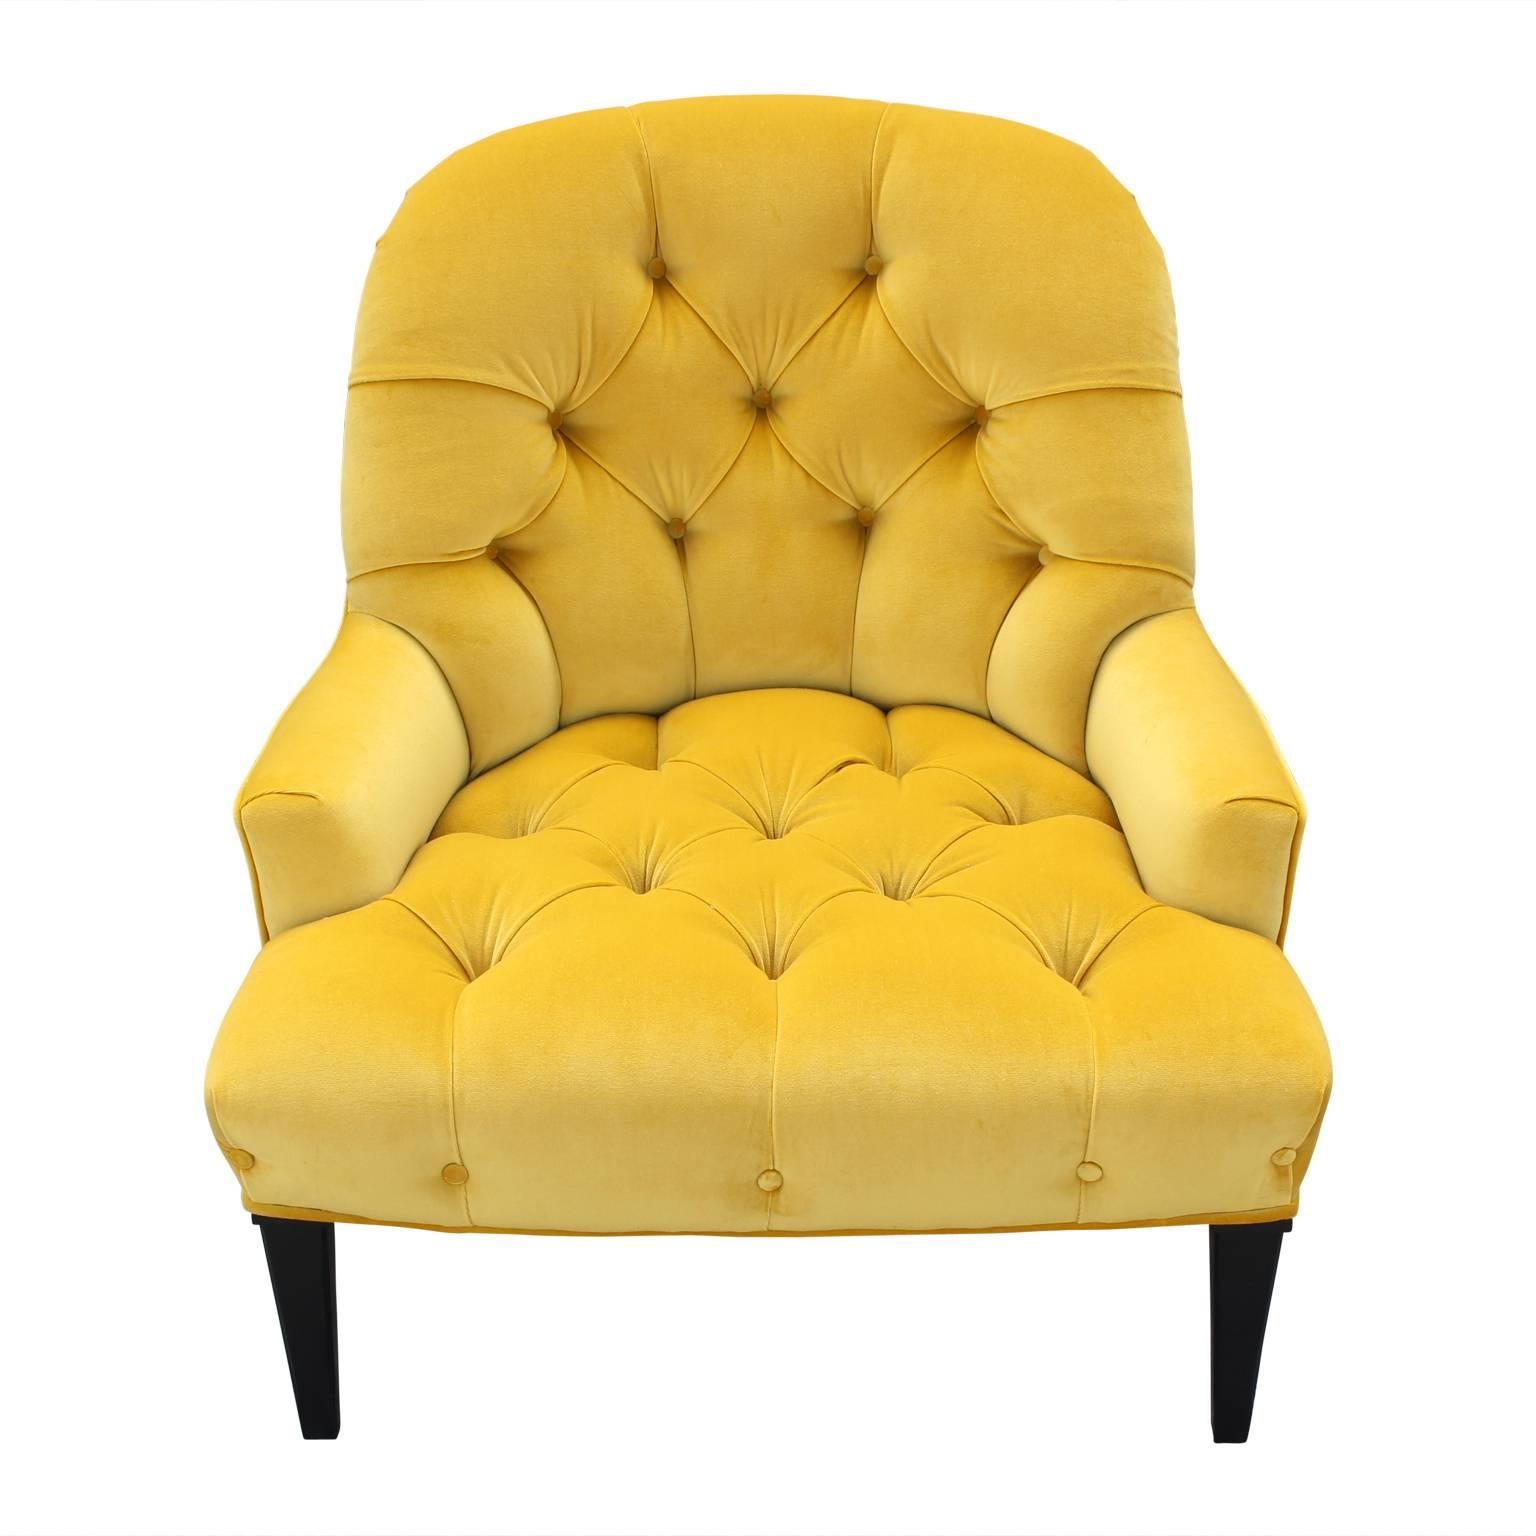 Pair of modern stunning French slipper lounge chairs reupholstered in a gorgeous tufted yellow Kravet velvet.